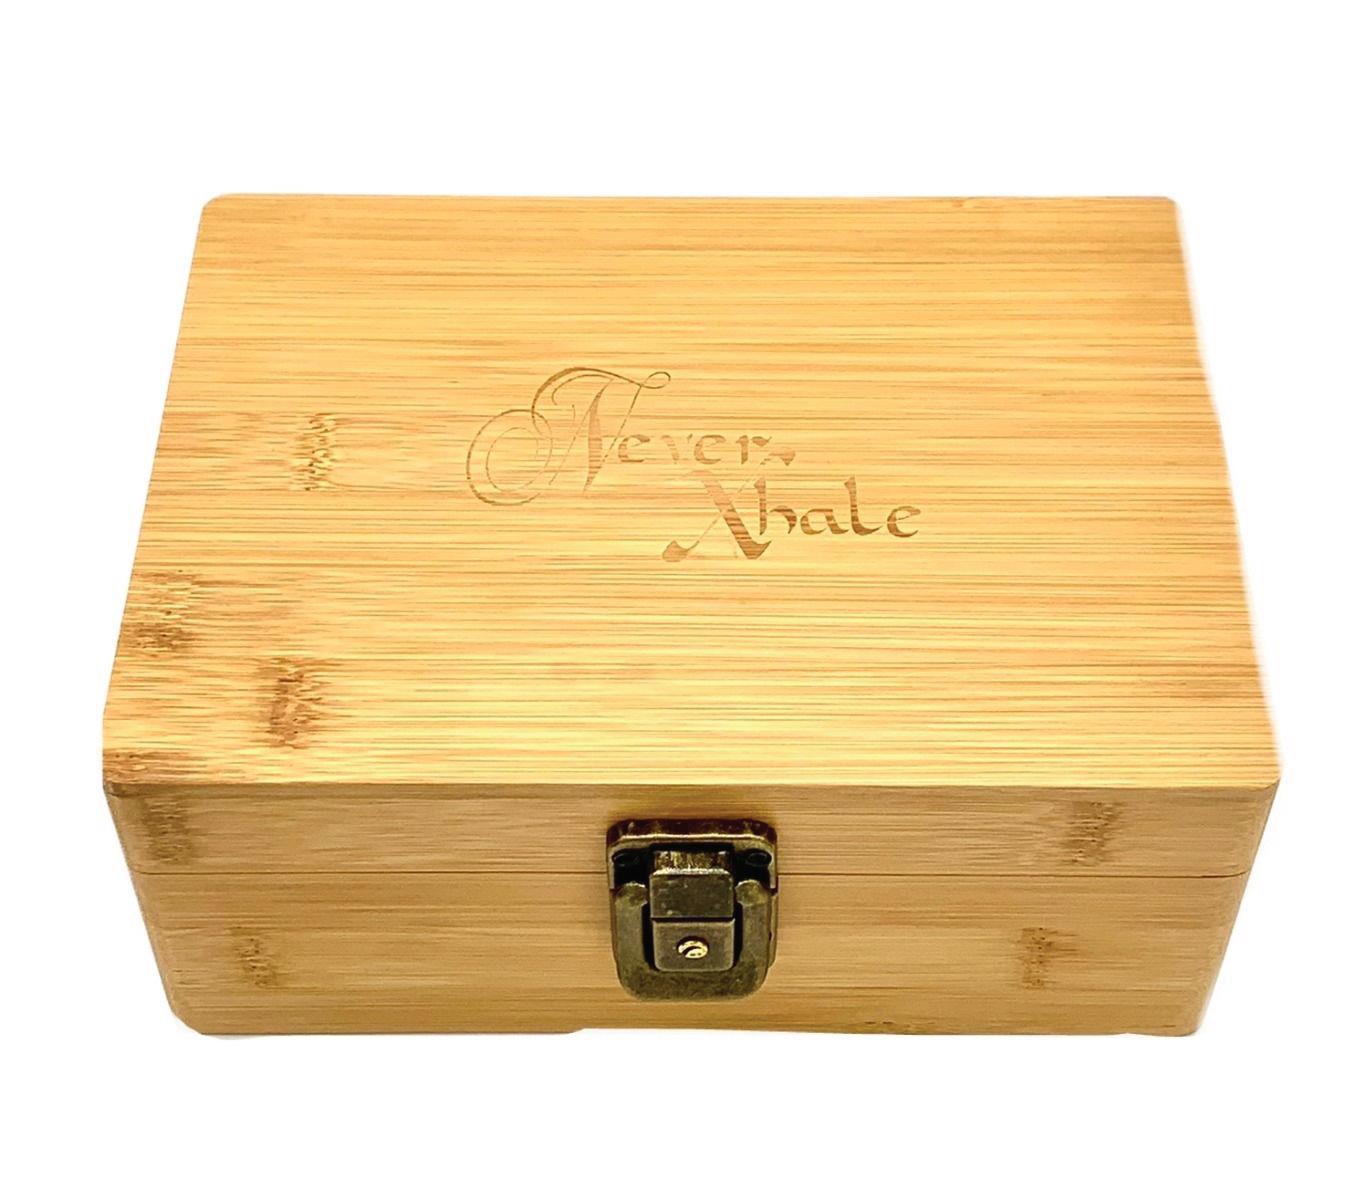 (3 unidades) Caja de almacenamiento de bambú NeverXhale de 9" x 7" x 4" $24 c/u